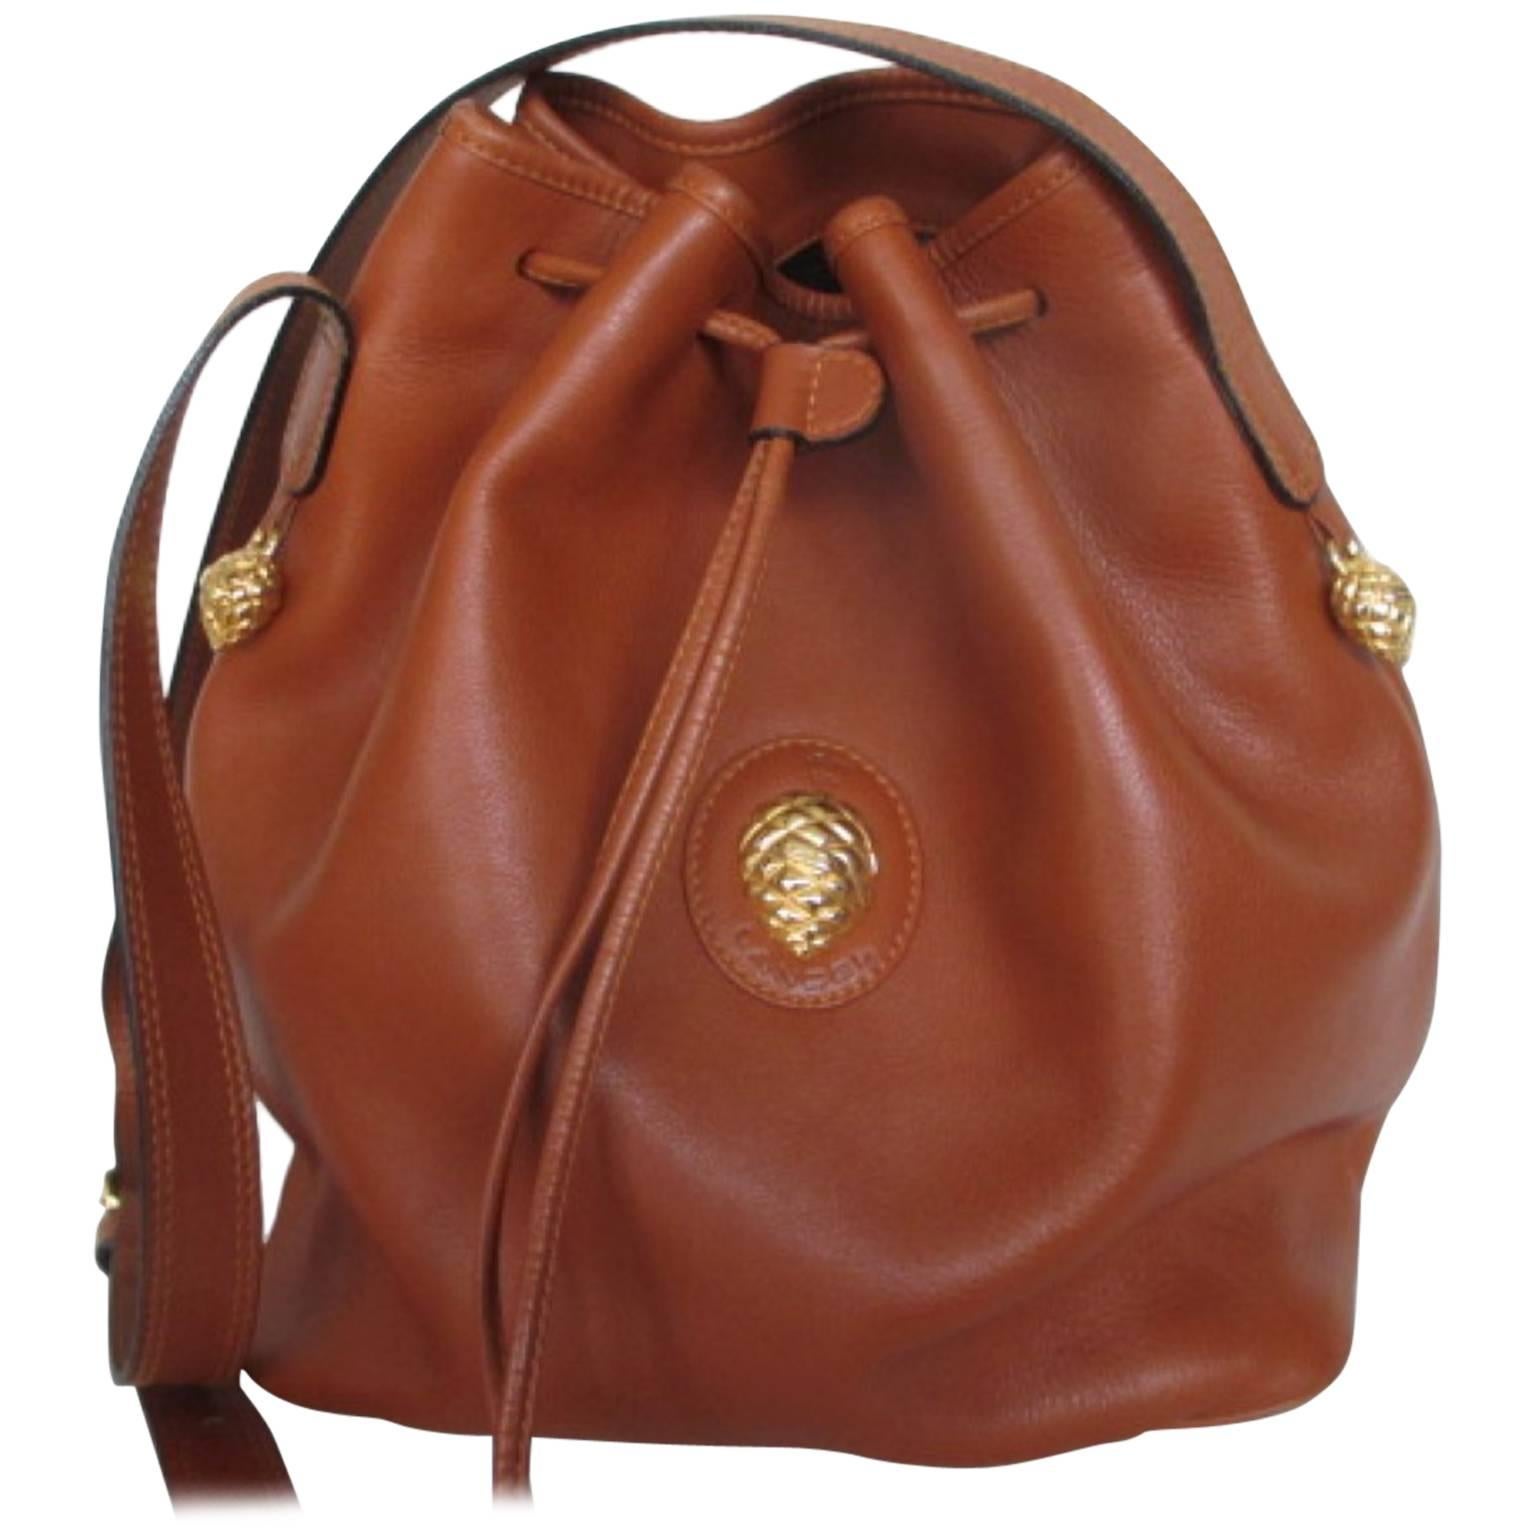 Lancel paris brown leather shoulder bag